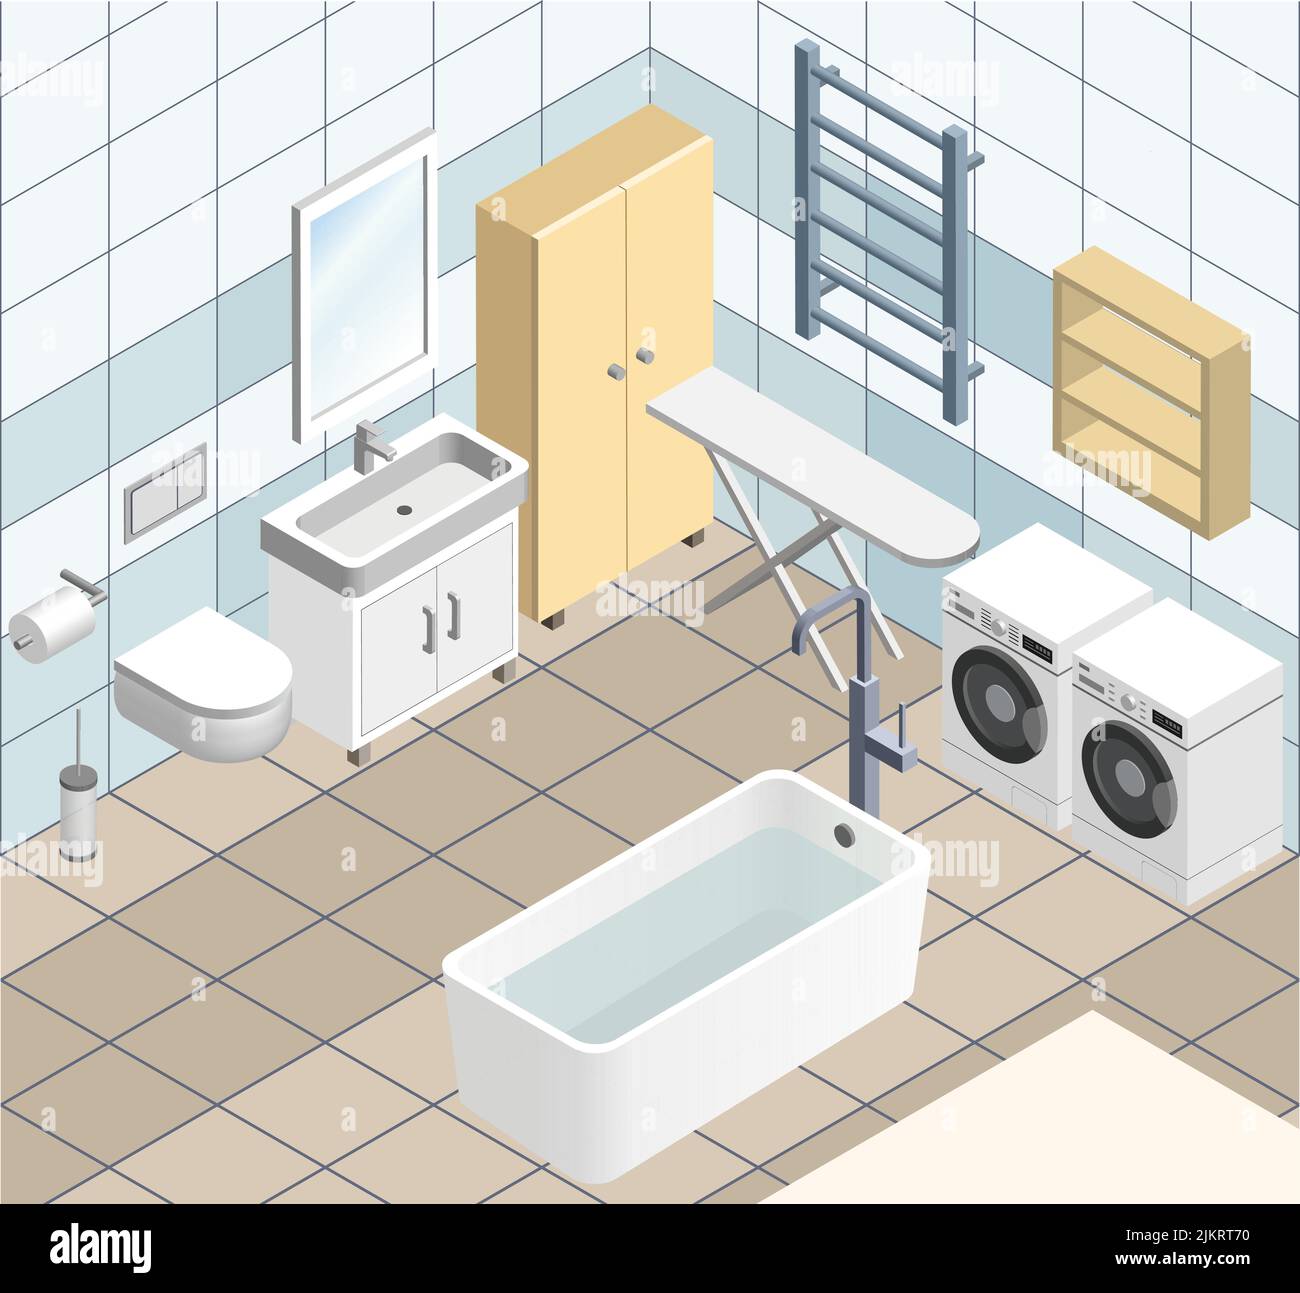 Bathroom interior vector isometric illustration Stock Vector